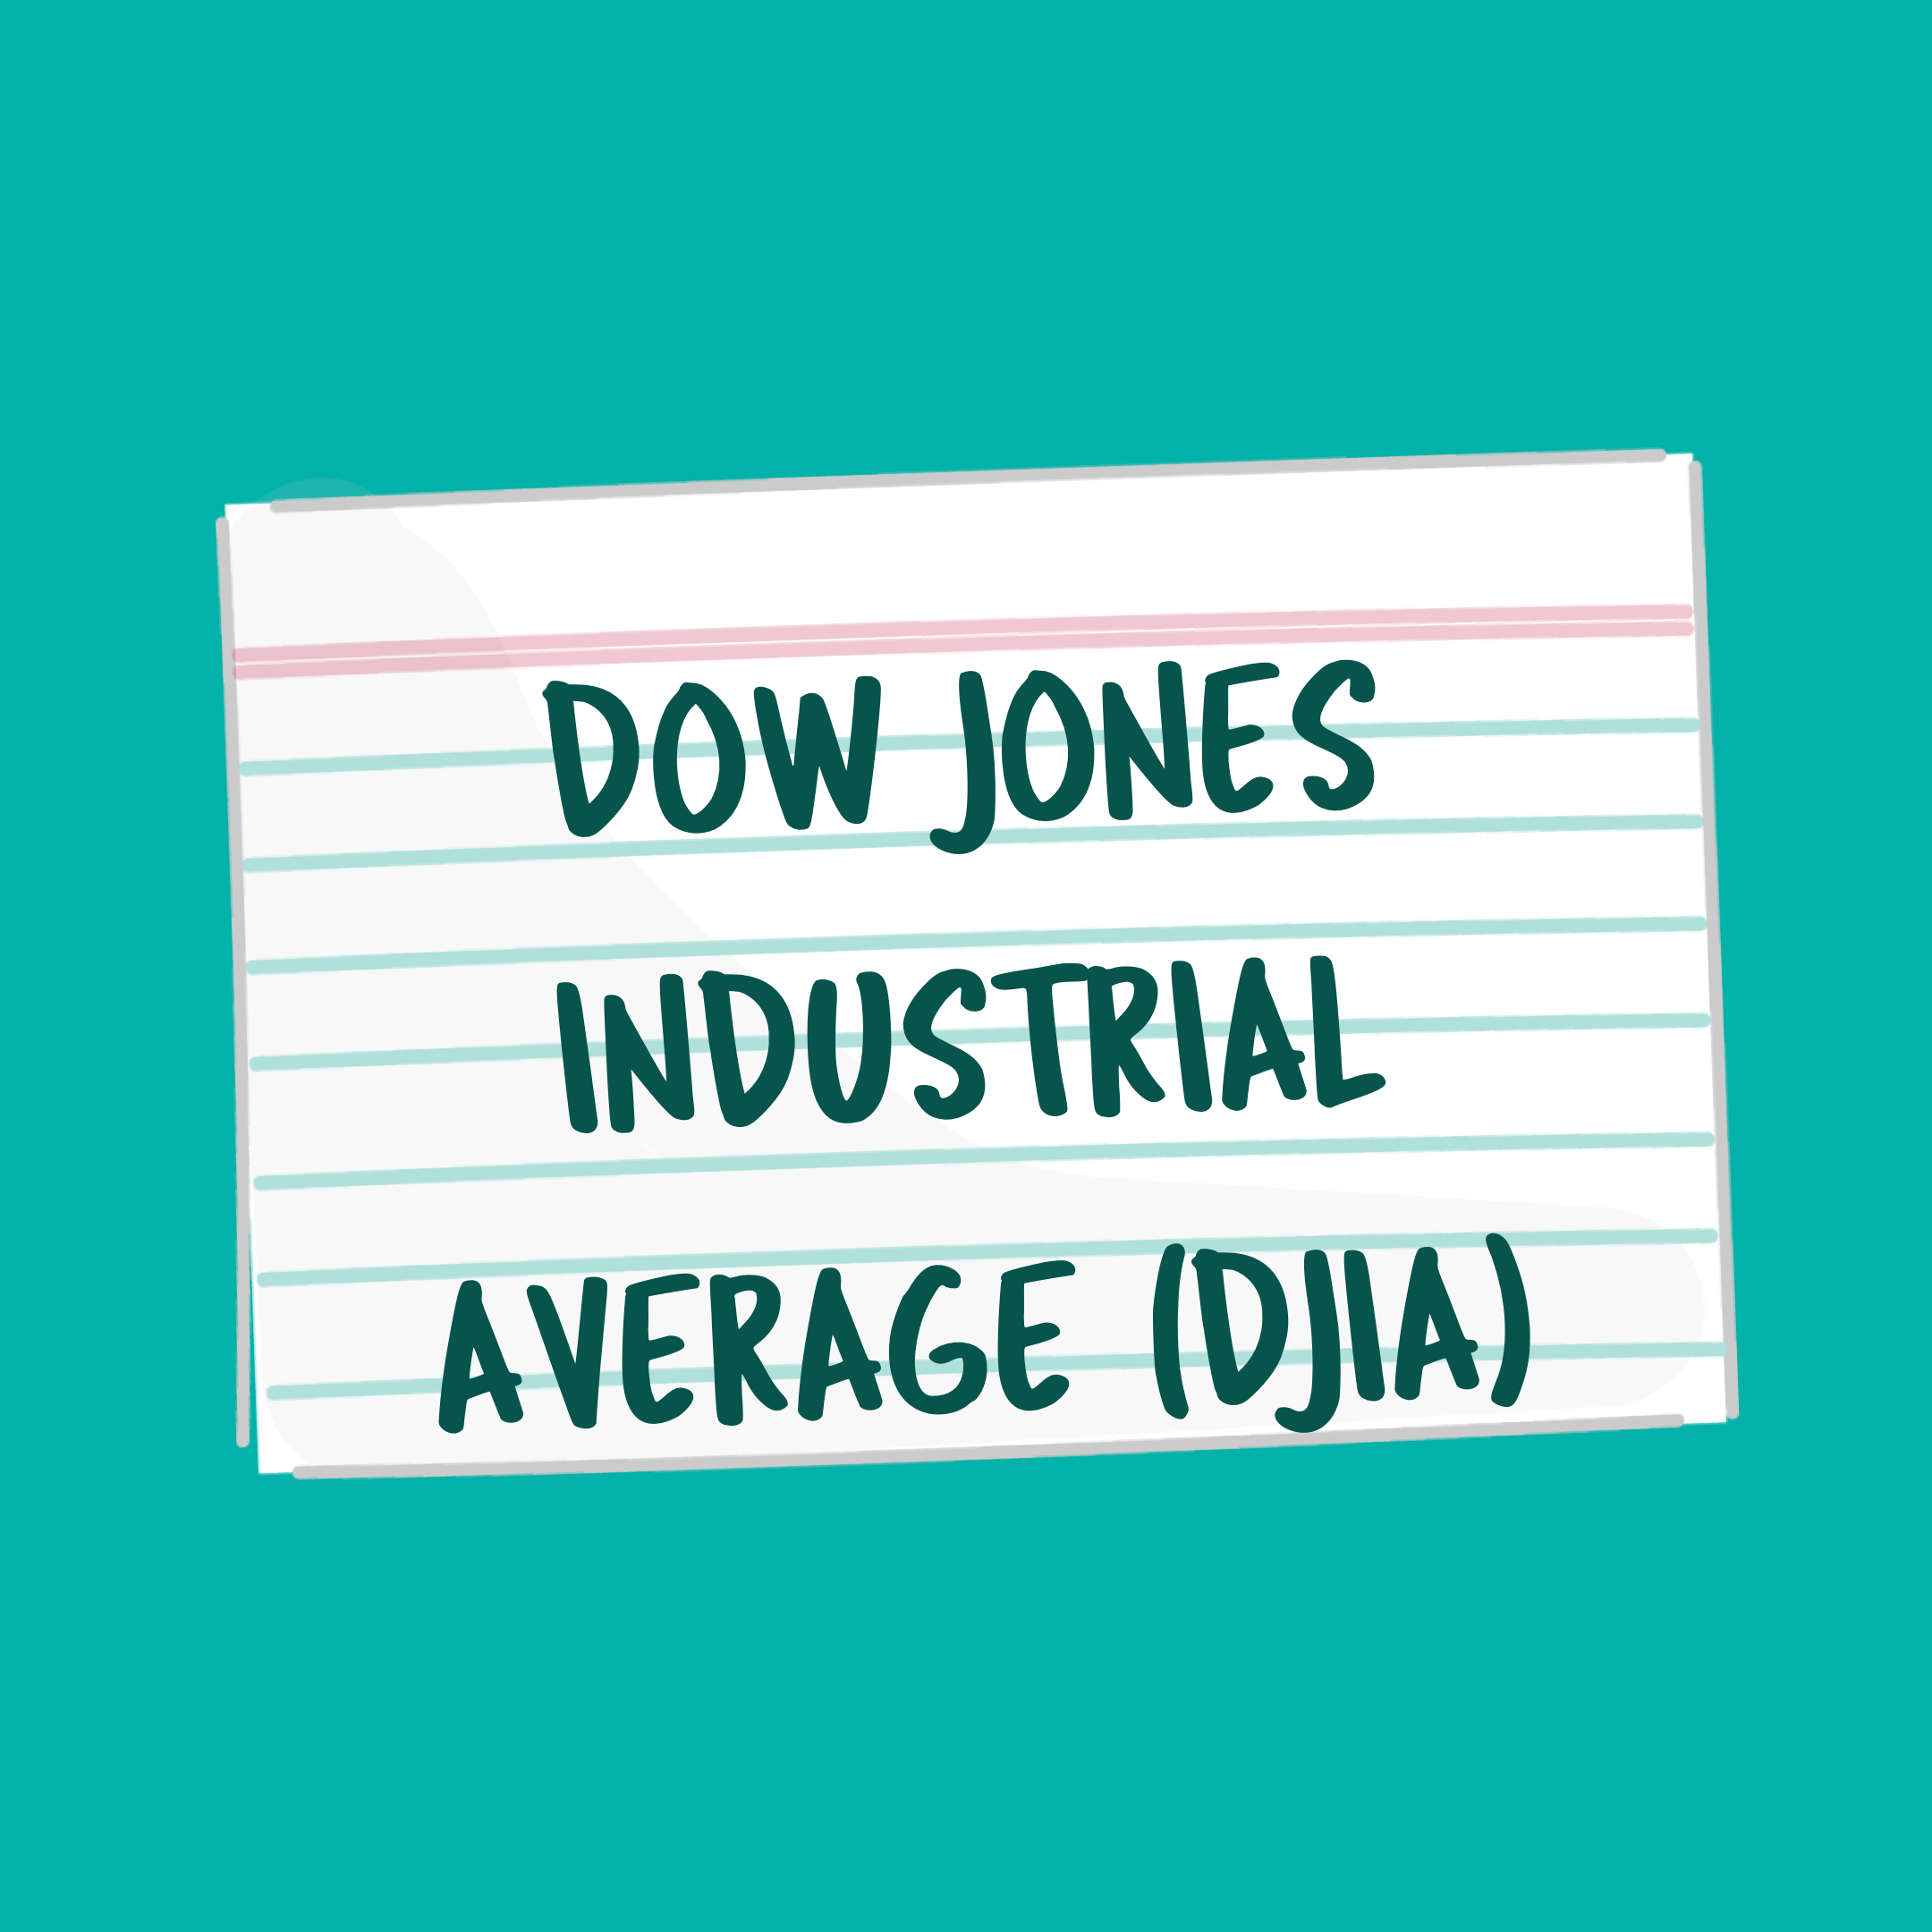 Dow Jones Industrial Average (DJIA) card